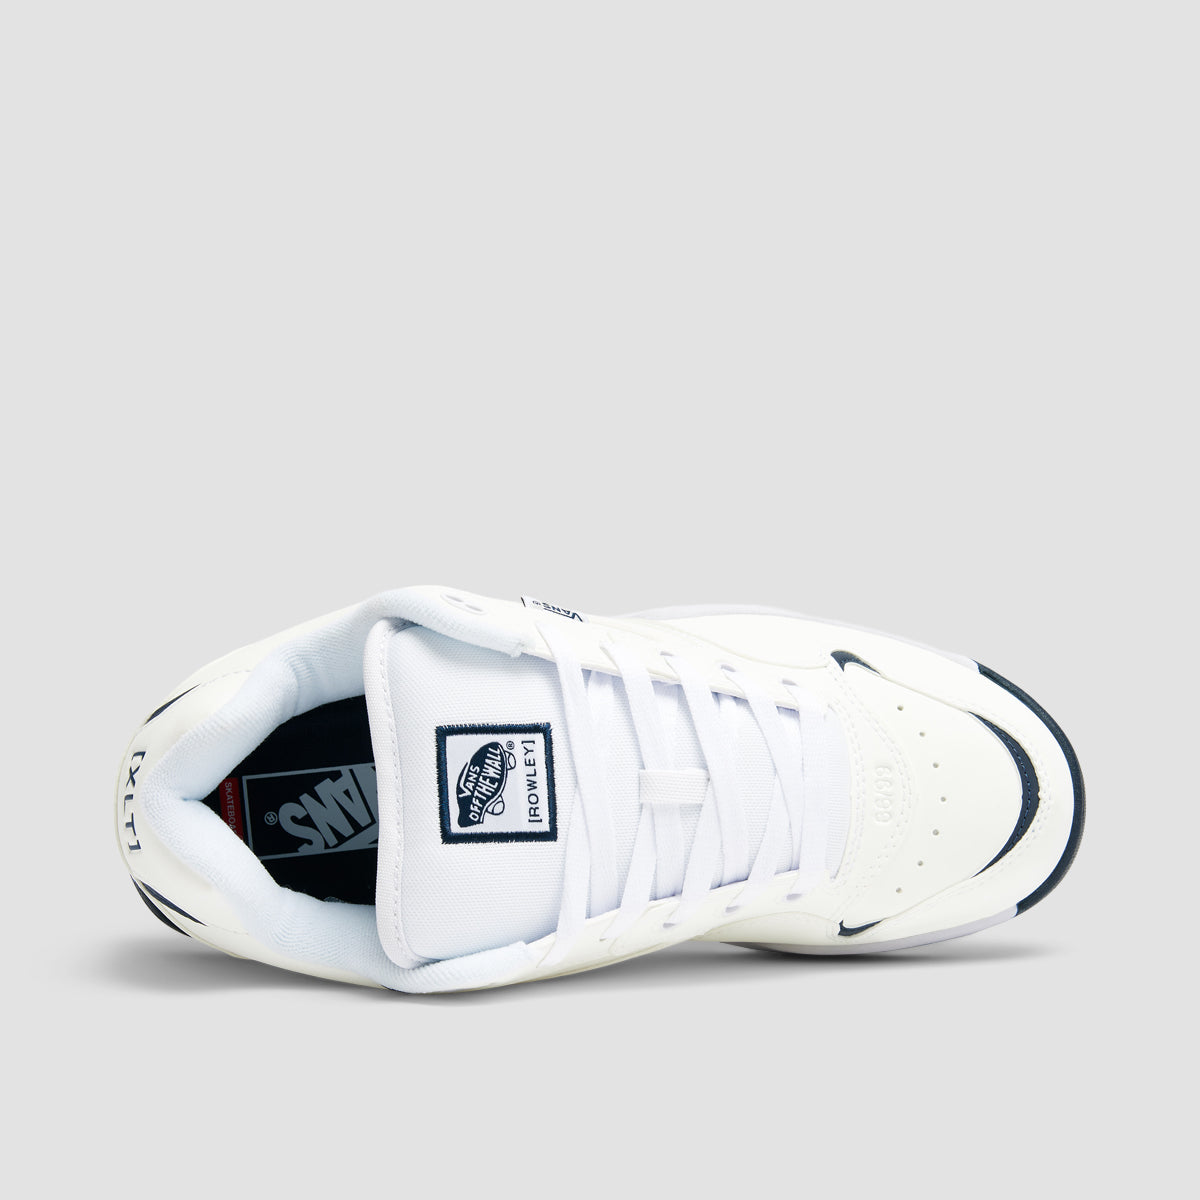 Vans Rowley XLT VCU Shoes - White/Navy